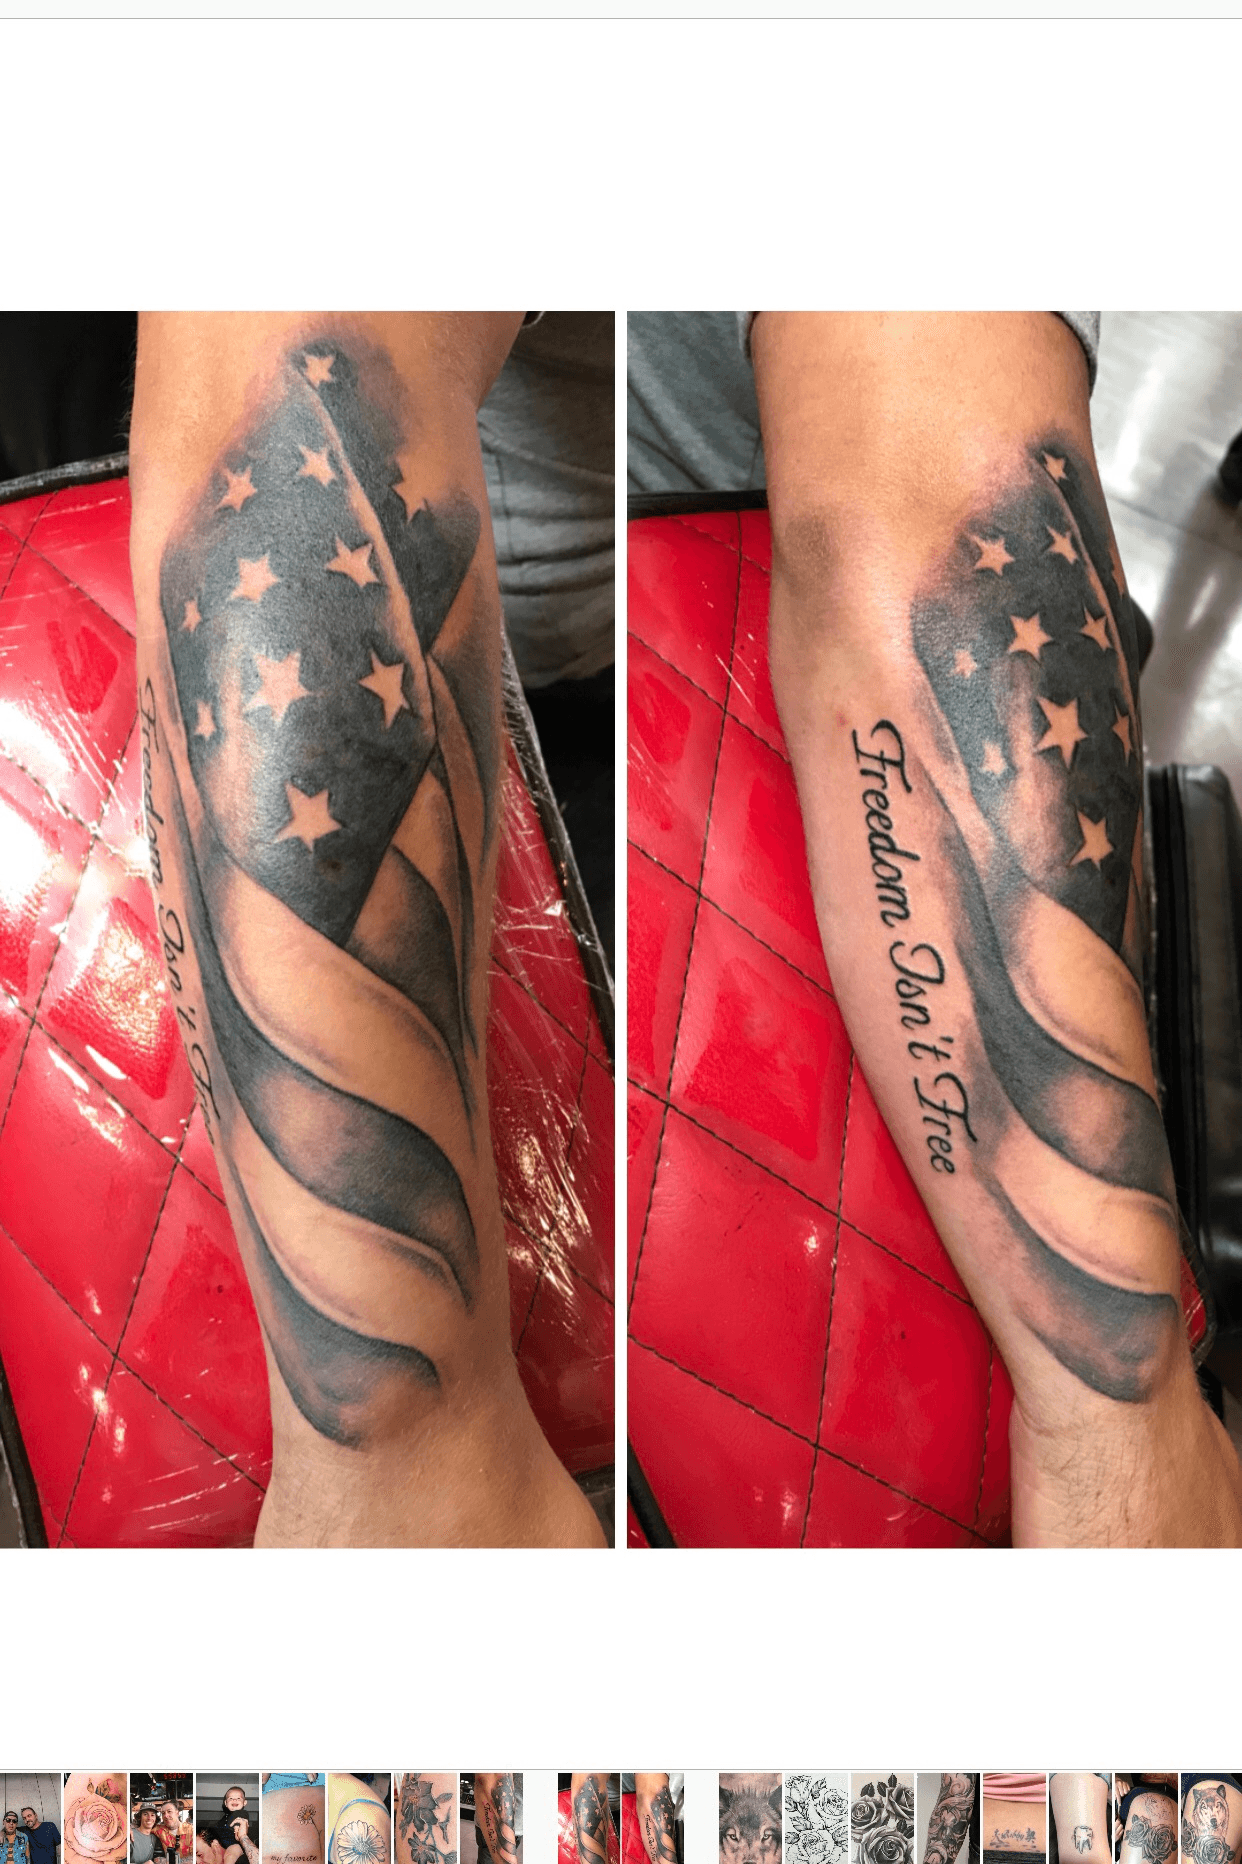 Freedom isnt free   Secret  Secret Addiction Tattoos  Facebook